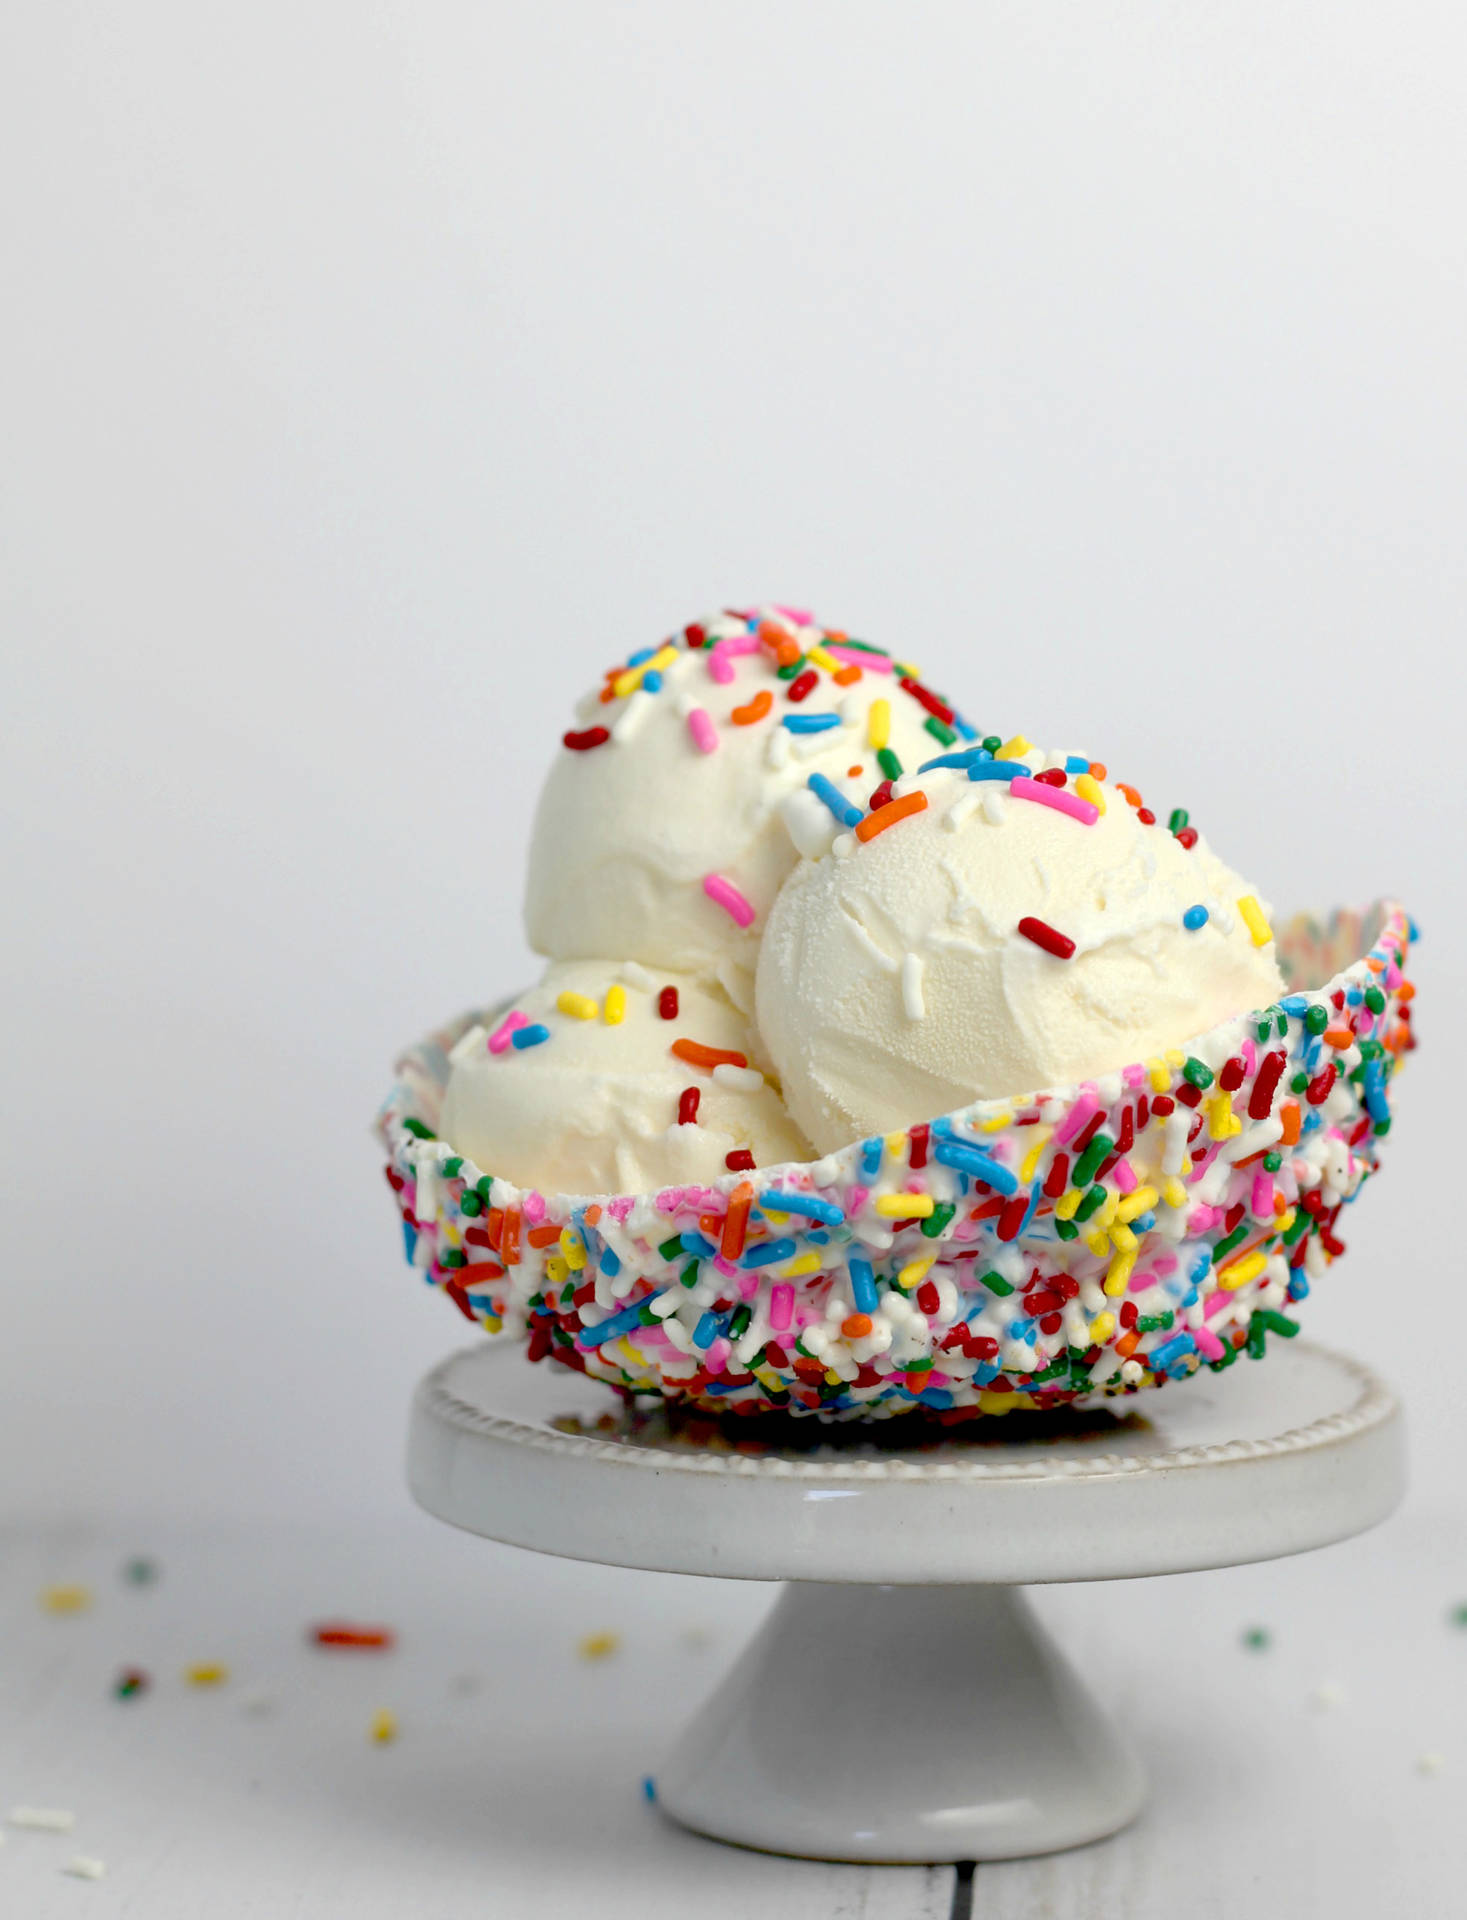 Vanilla Ice Cream With Sprinkles Background